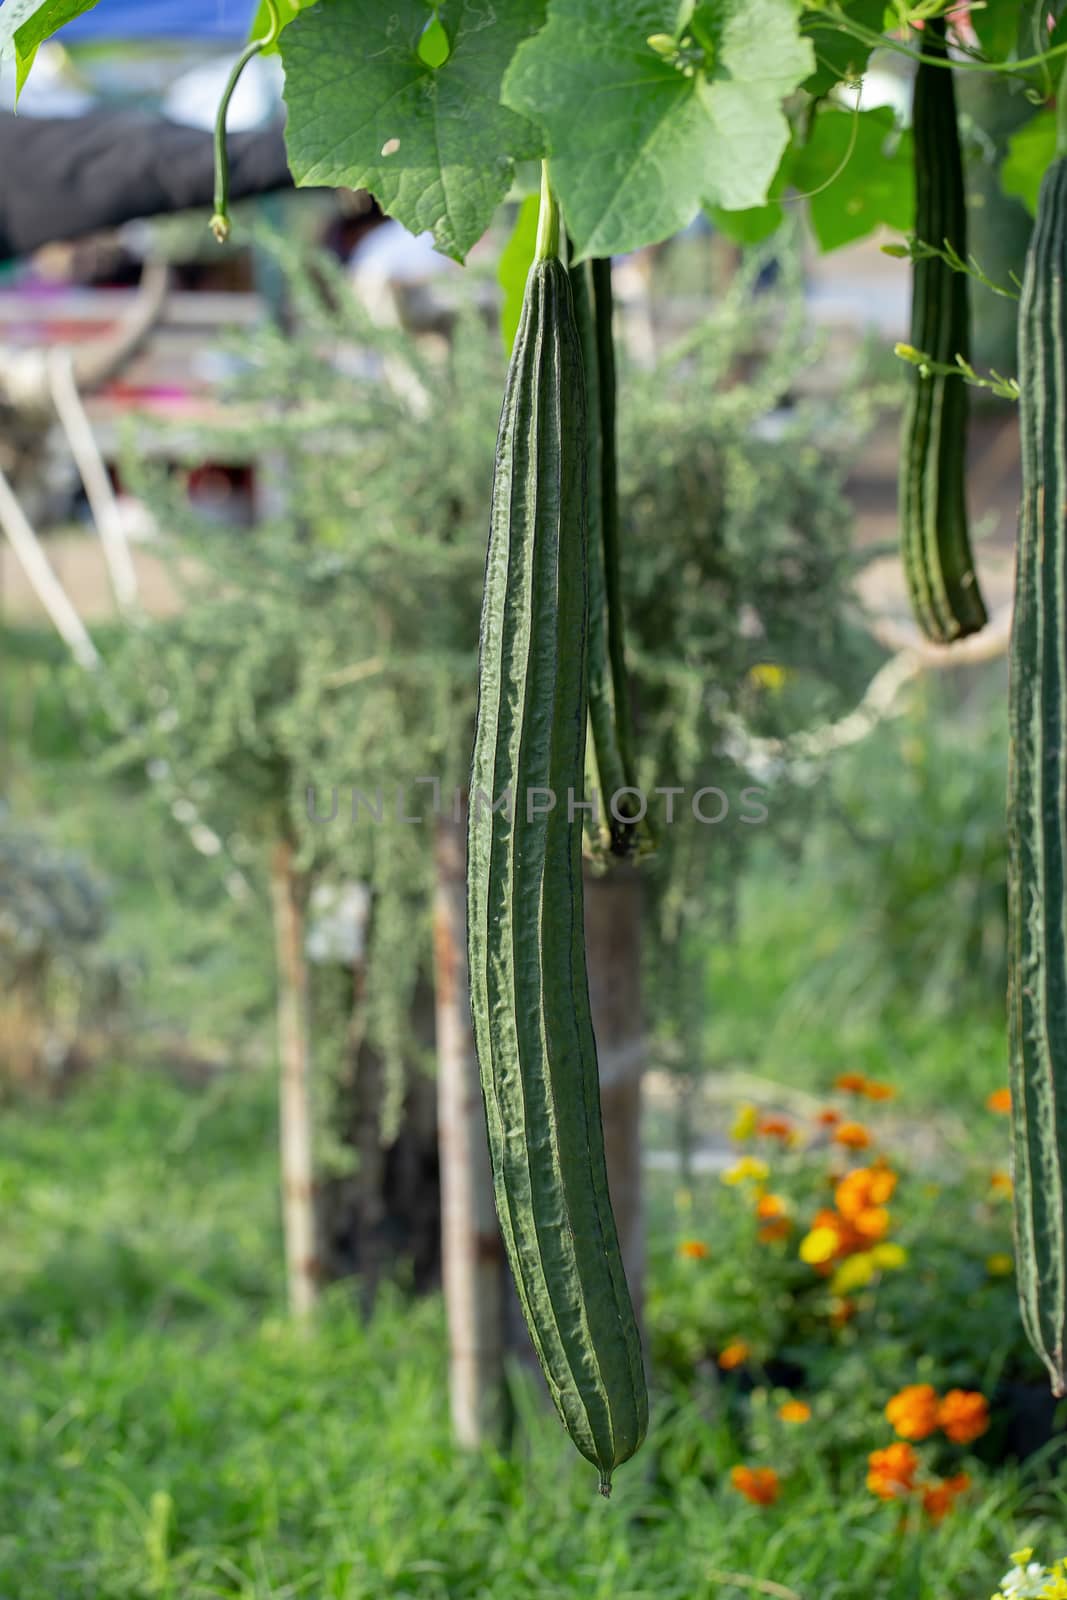 Luffa gourd plant in garden, luffa cylindrica by kaiskynet